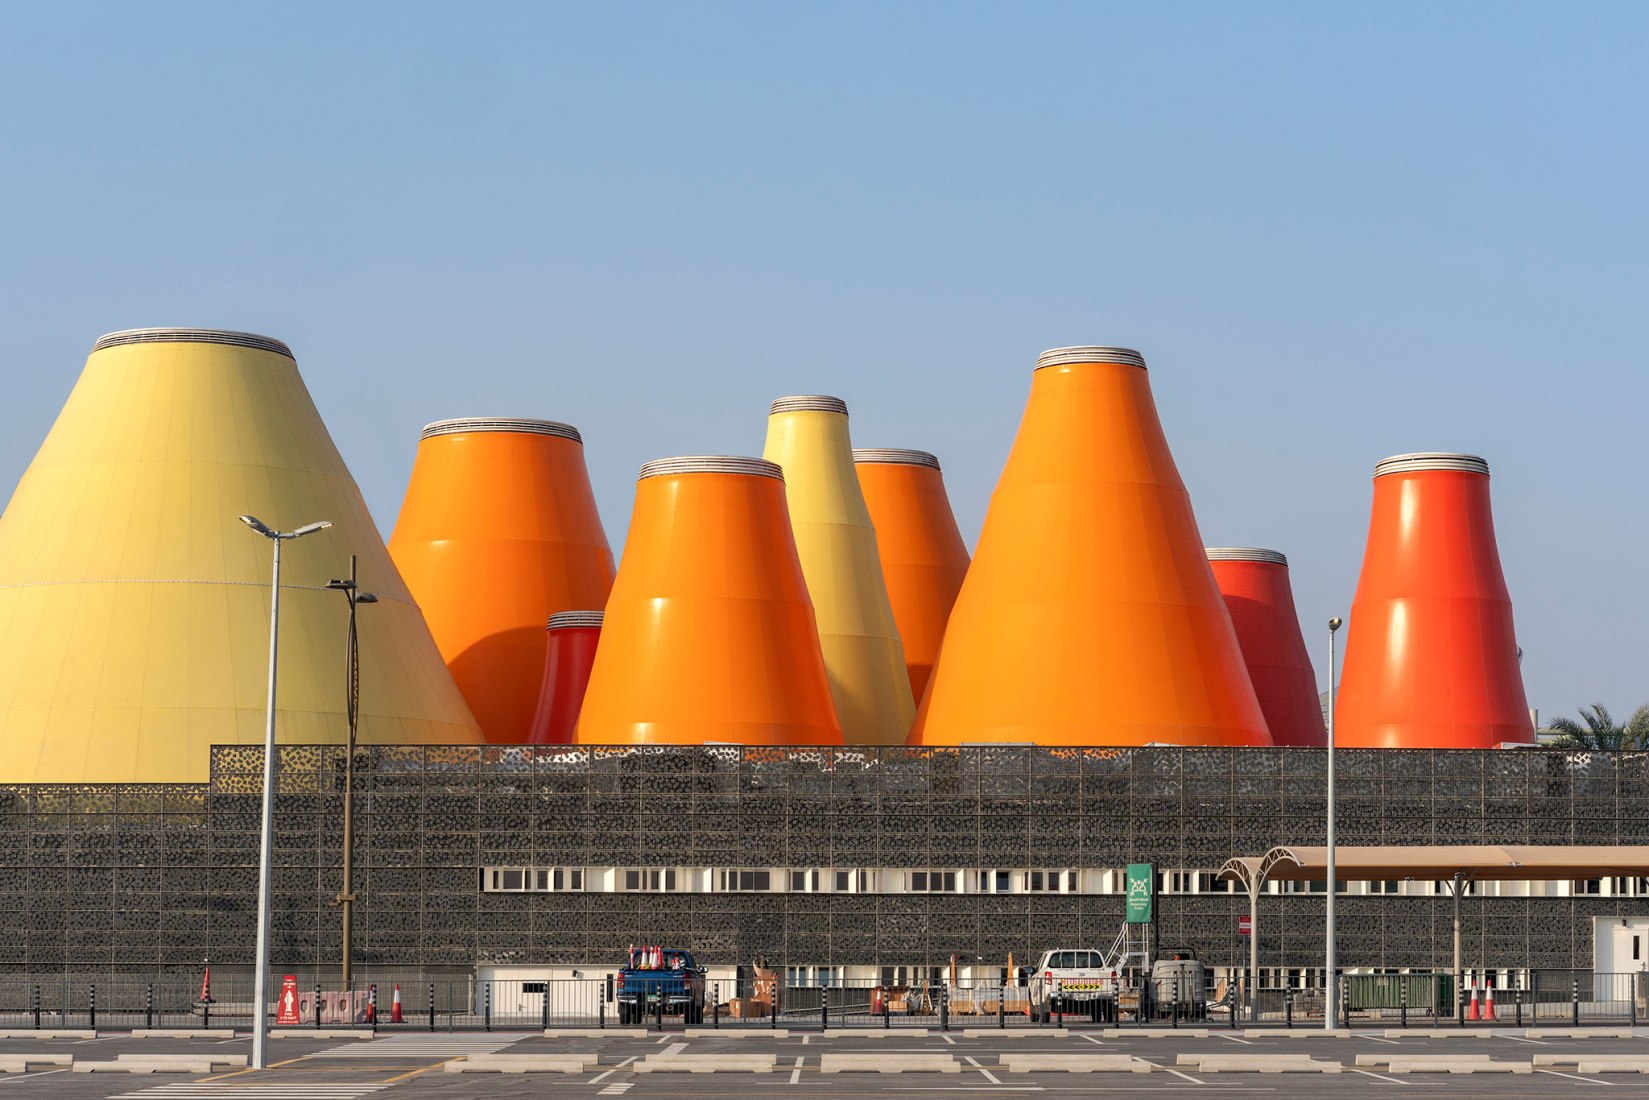 Pabellón Español para la Expo Dubai 2020 (II). Fotografía por Luis Asín.